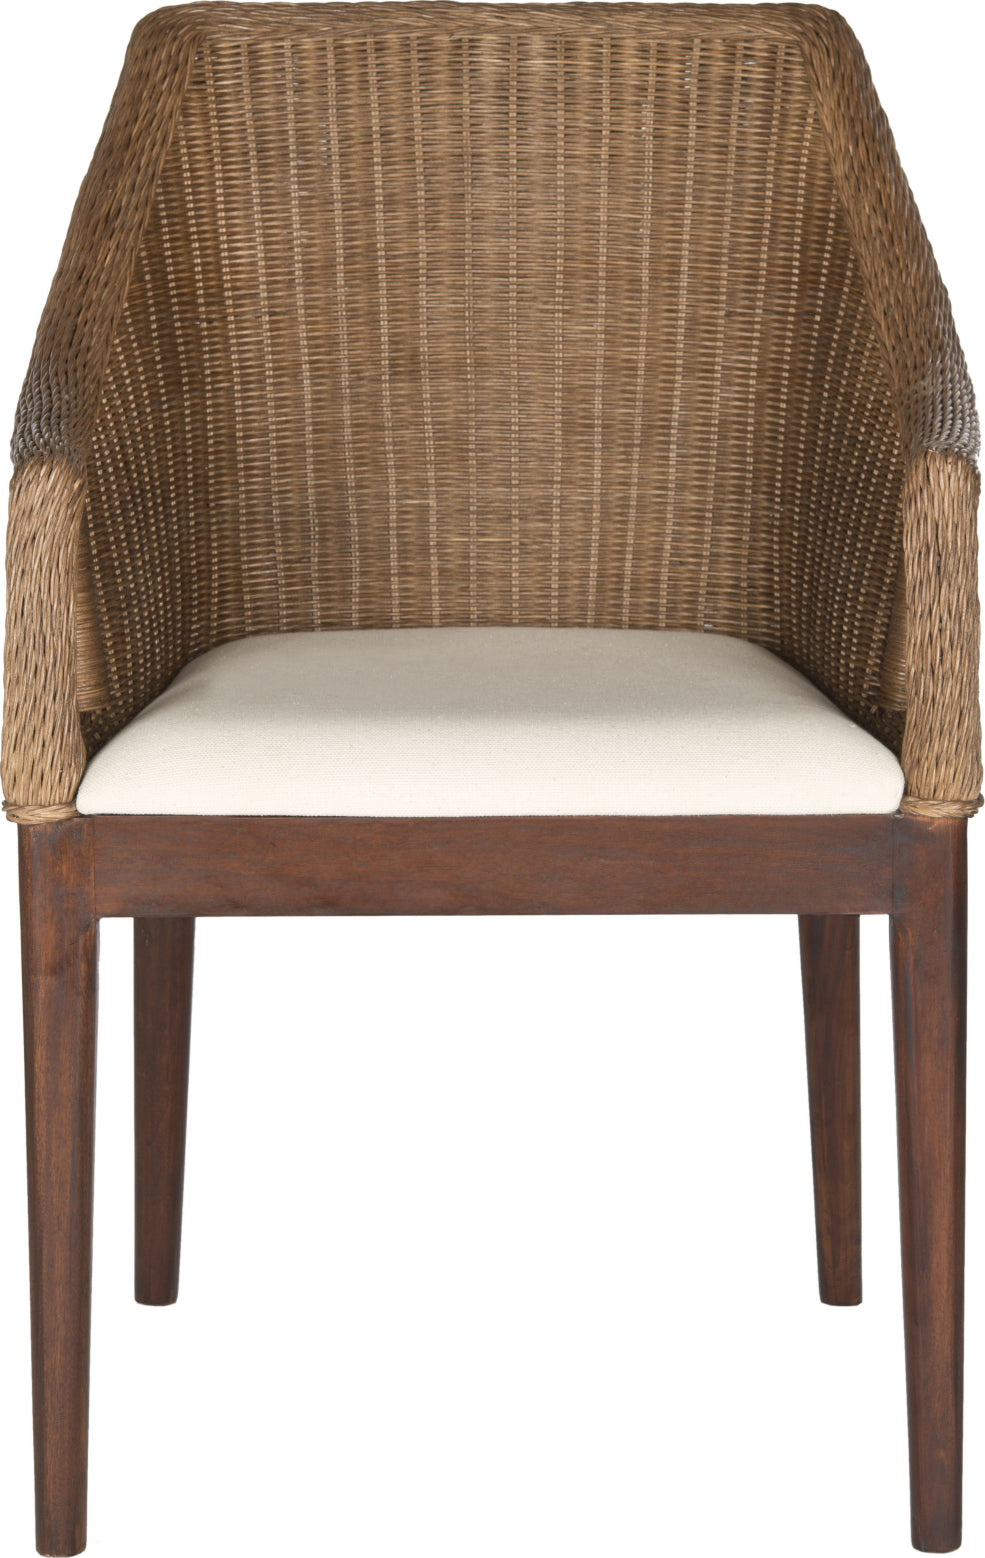 Safavieh Enrico Arm Chair Multi Brown Furniture main image